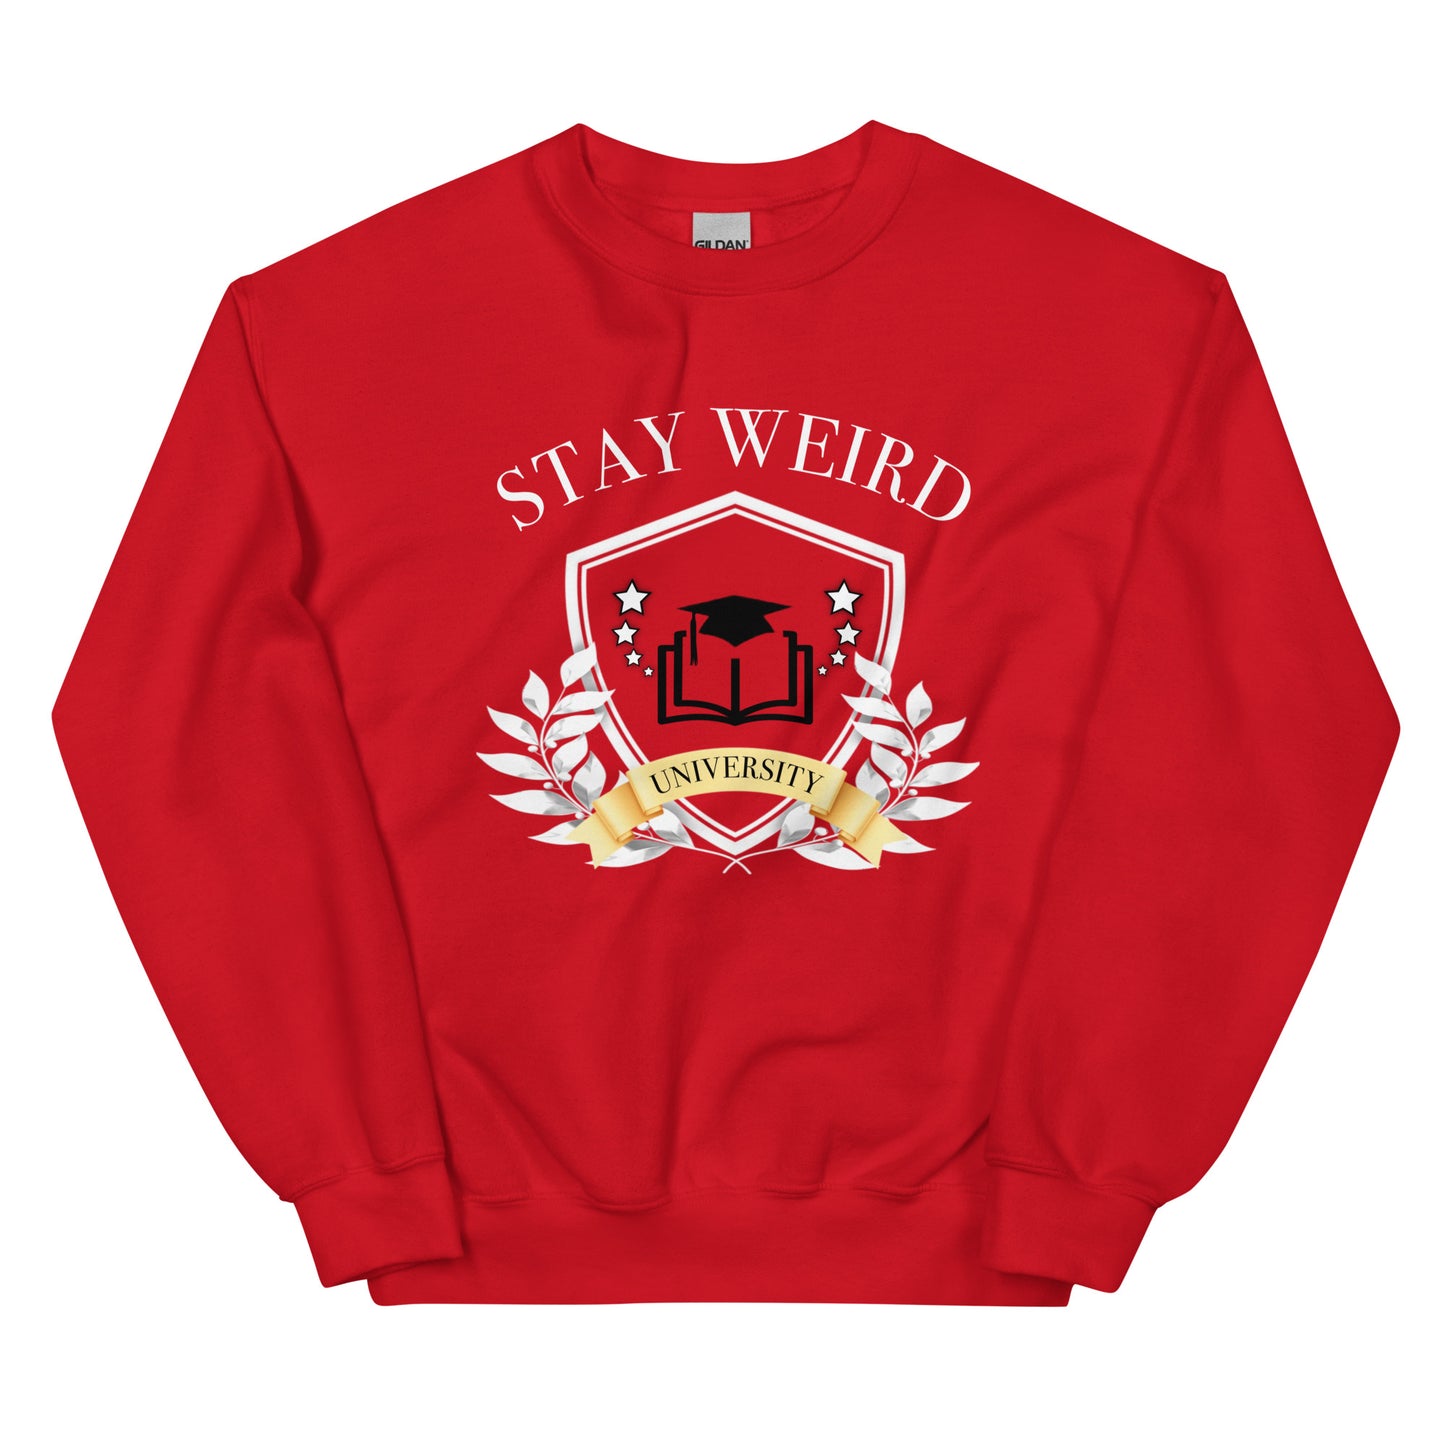 Stay Weird University Sweatshirt